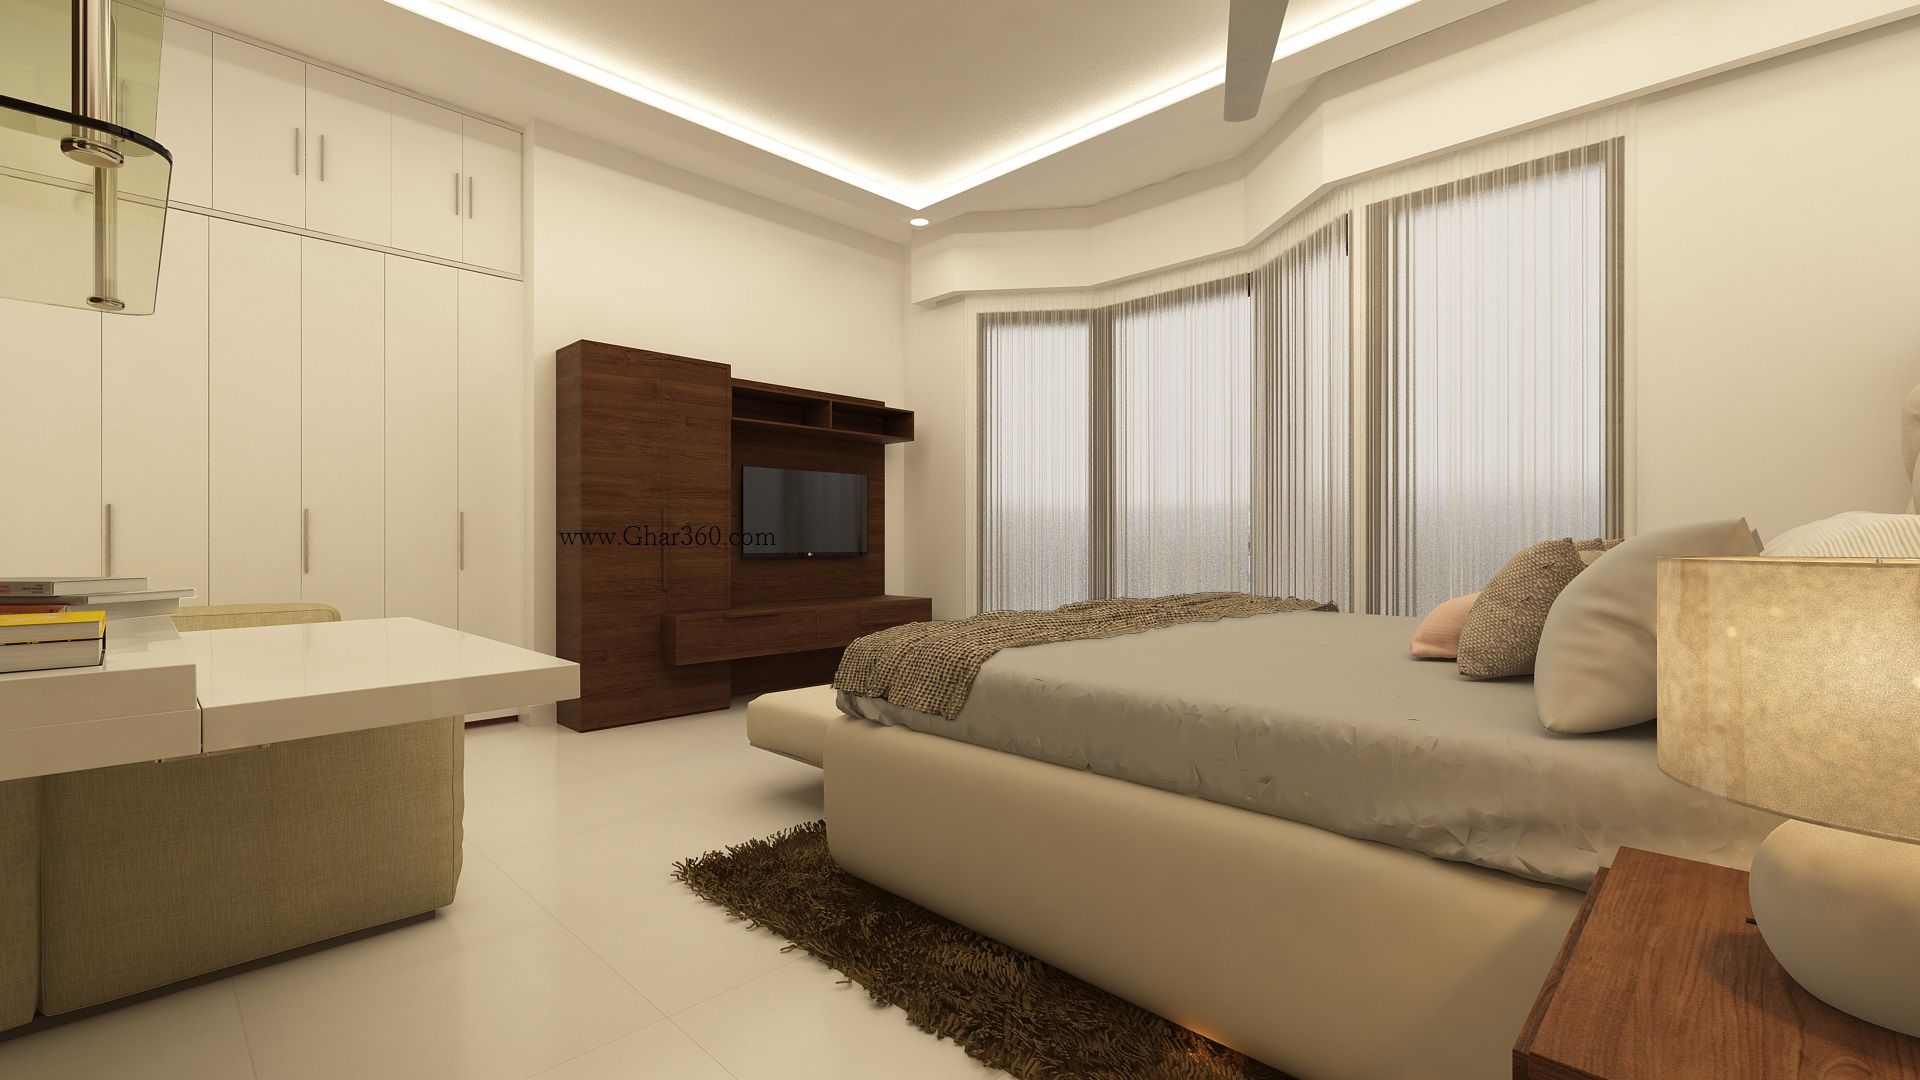 4 Bedroom Apartment Interior Design Bangalore, Ghar360 Ghar360